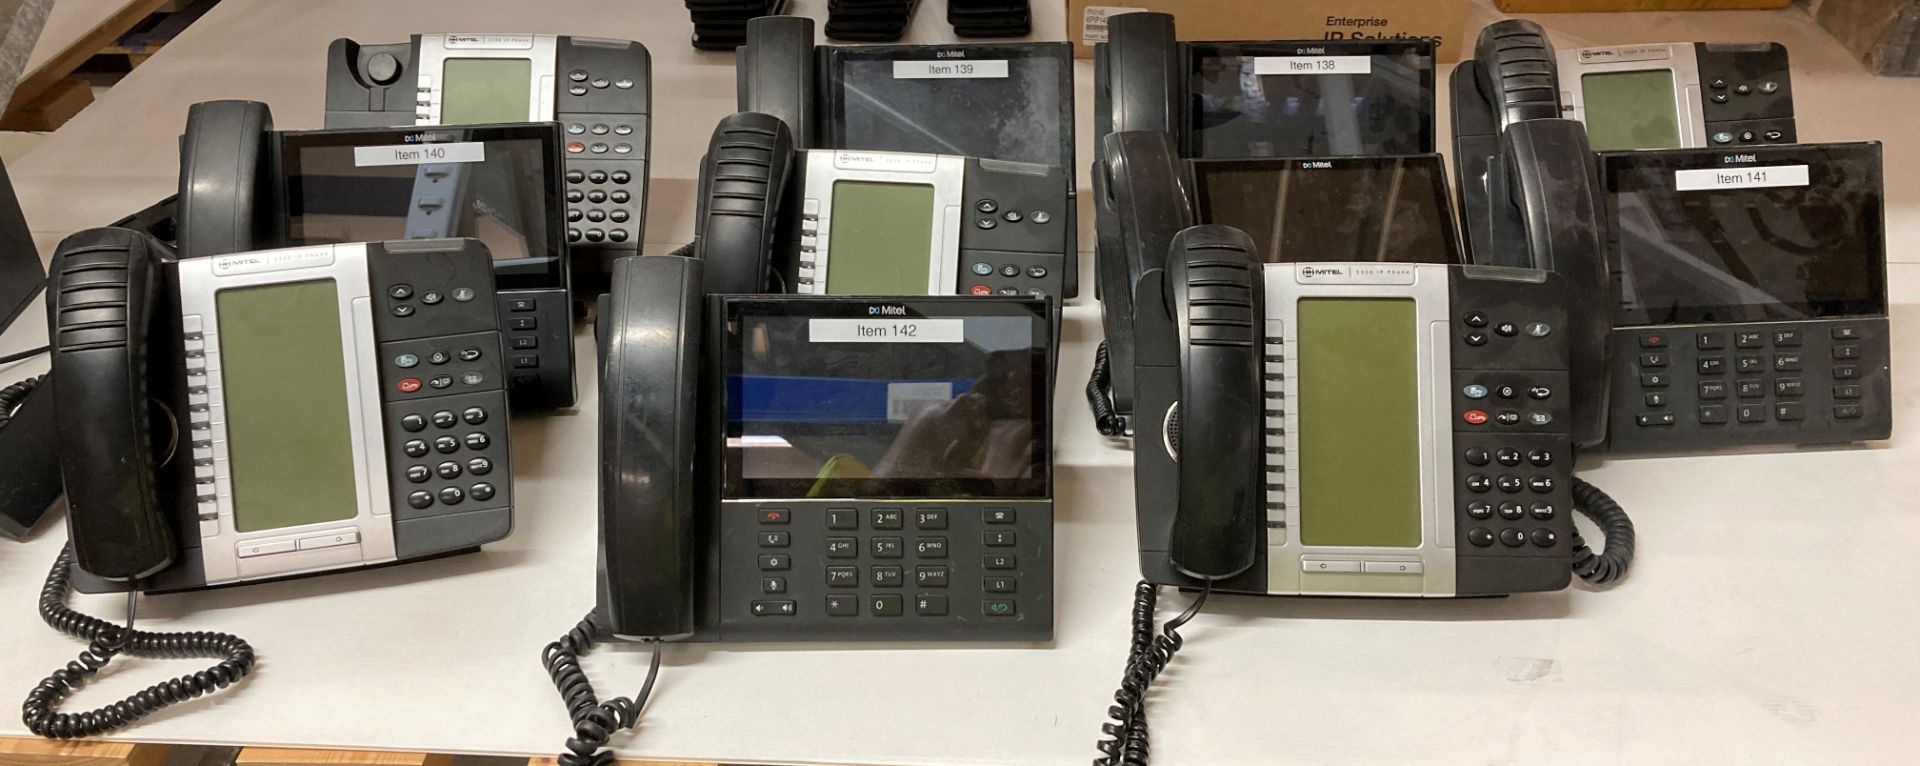 6 x Mitel 6873i SIP Phones and 6 Mitel 5330 IP Phones (12) (Saleroom location: G11)